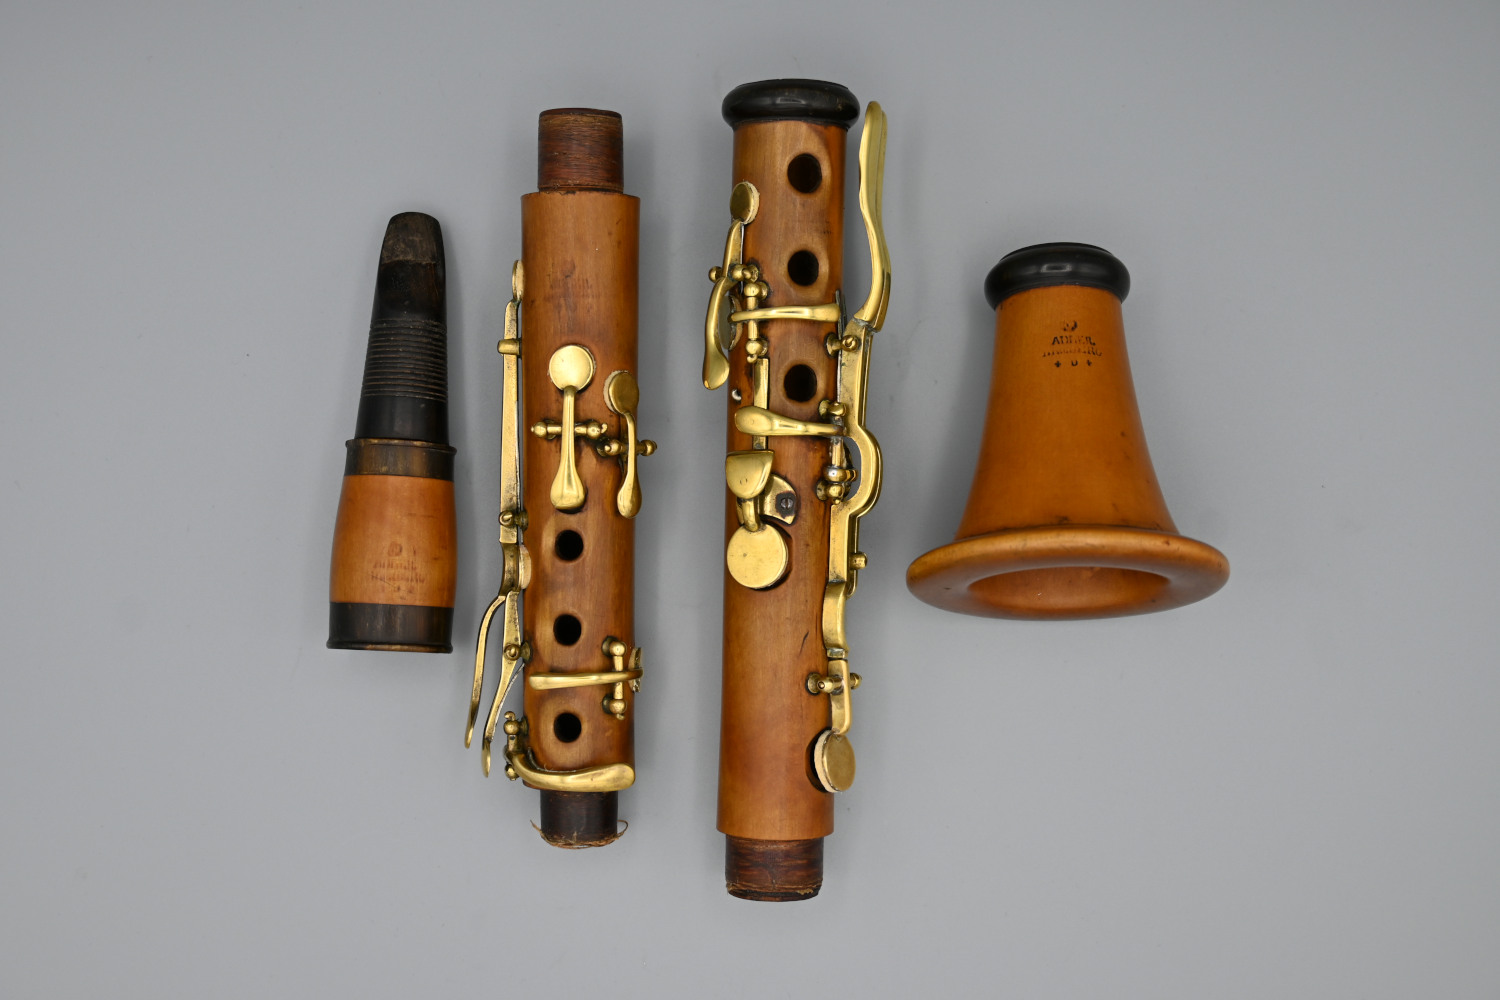 Adler-D-clarinet-VM-collectables2